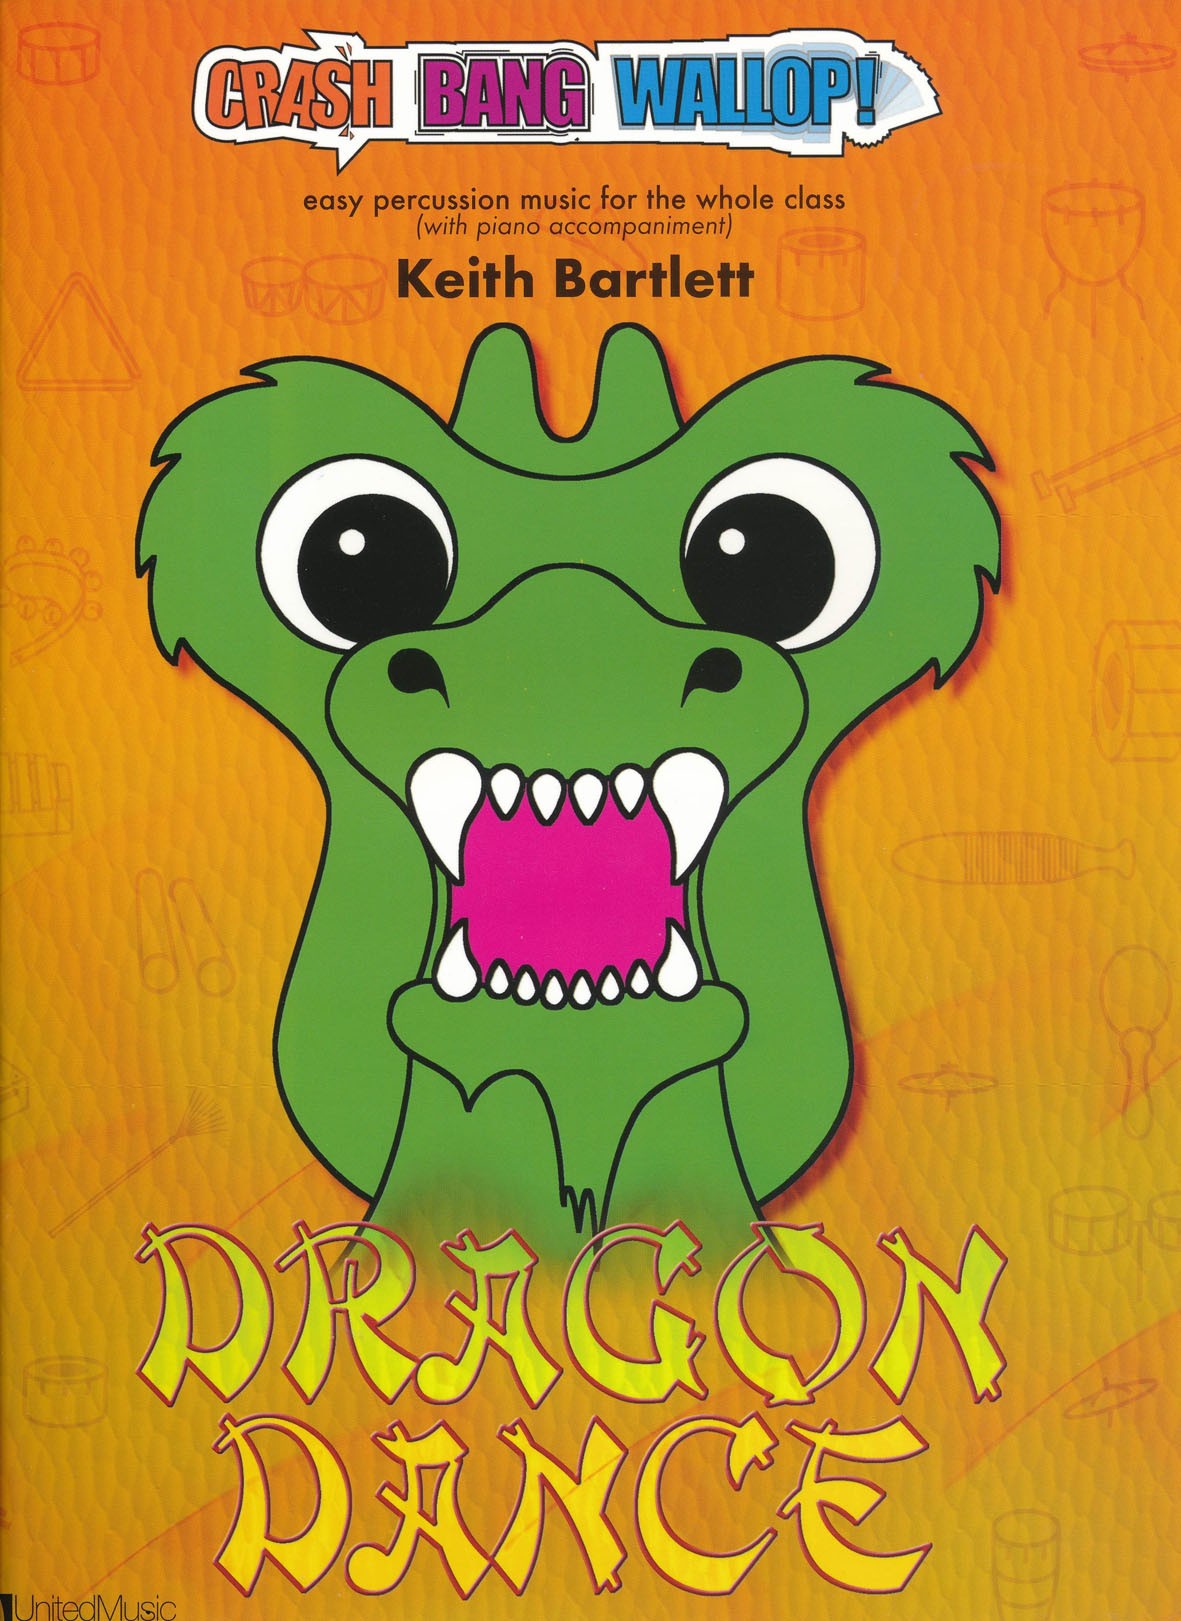 Crash, Bang, Wallop! - Dragon Dance by Keith Bartlett